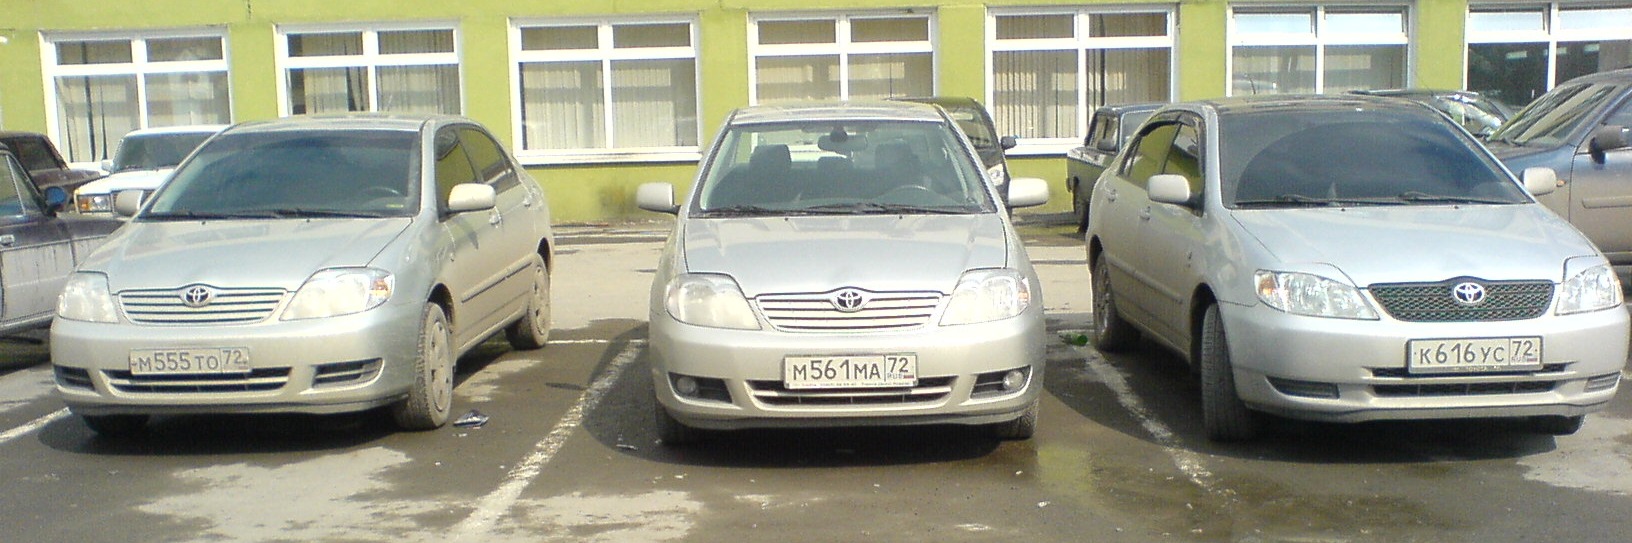 2010 Toyota Corolla 14 2004